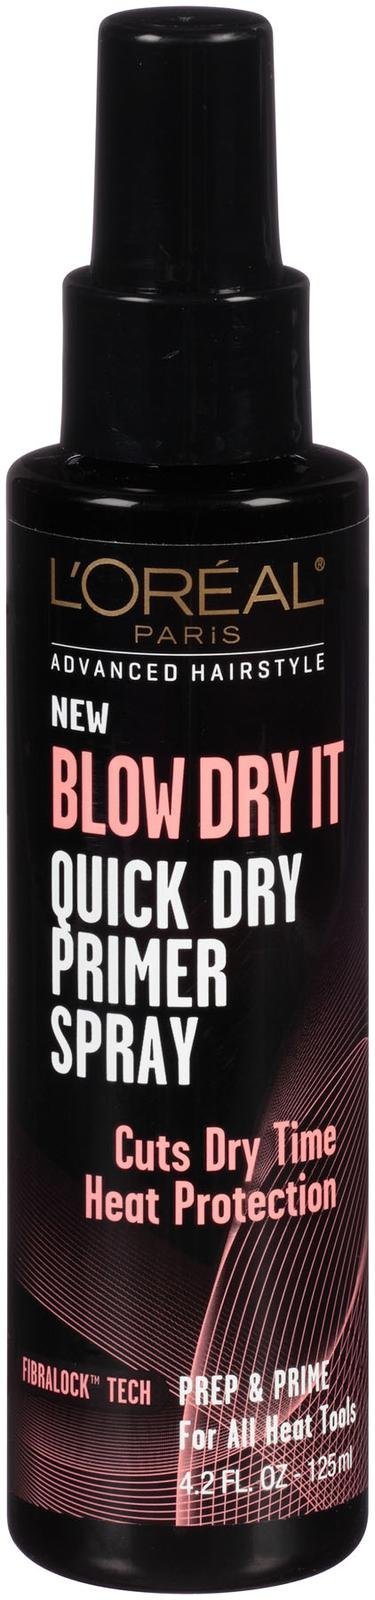 L'Oreal Paris Advanced Hairstyle BLOW DRY IT Quick Dry Primer Spray 4.2 fl; oz.